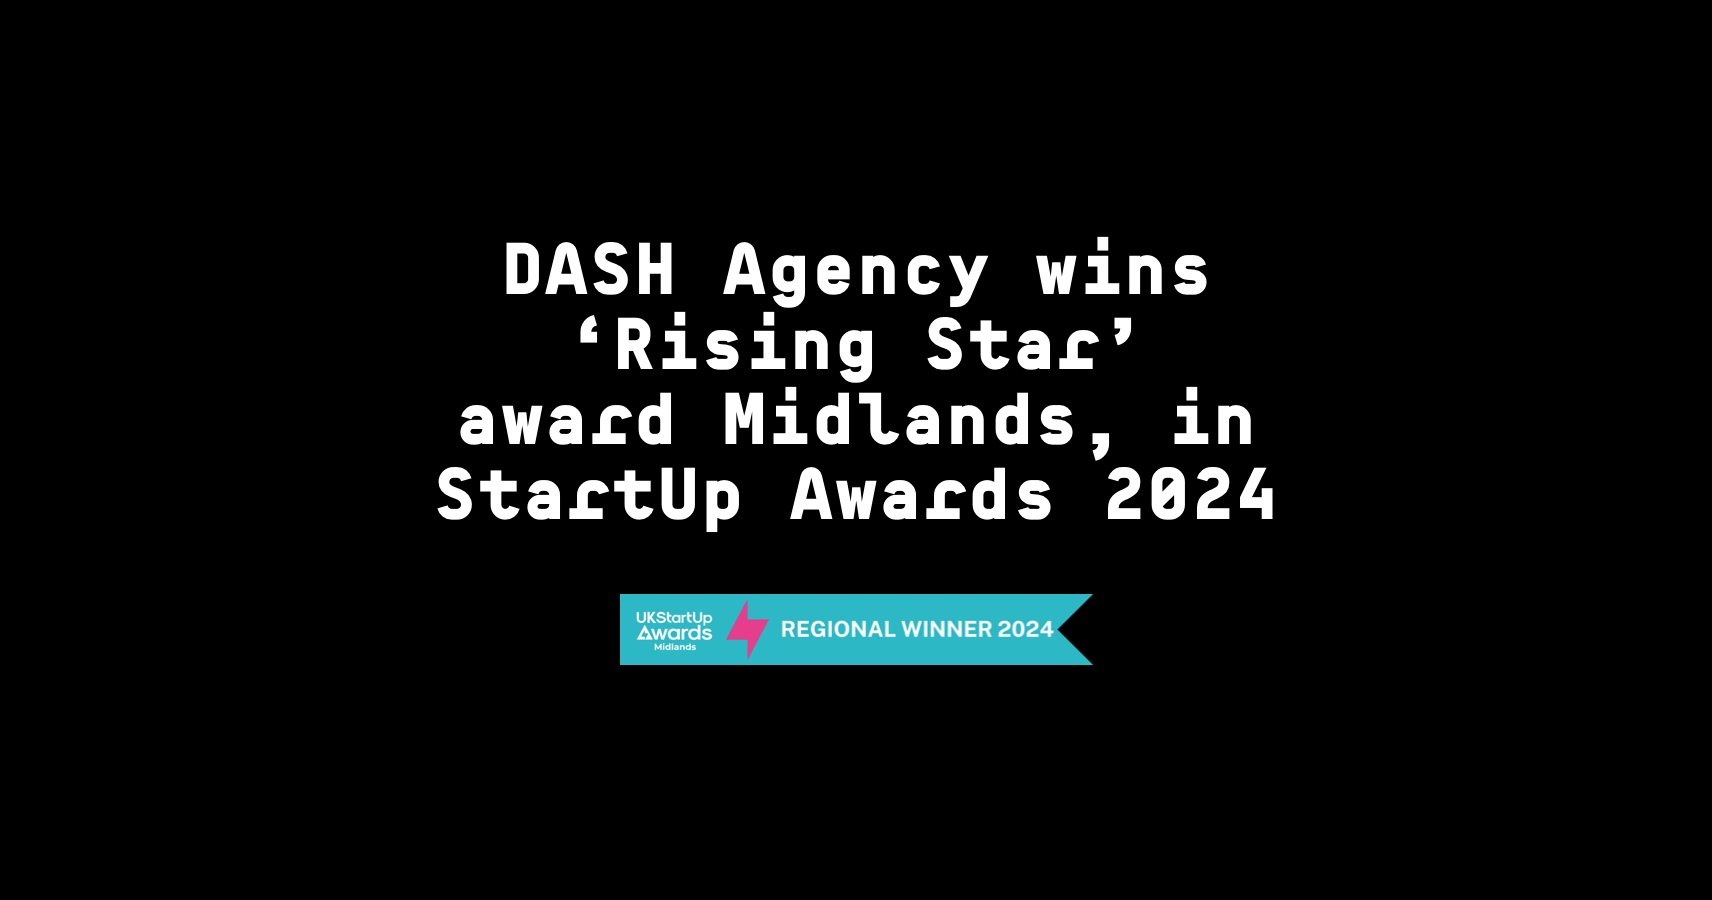 Midlands Business Dash Agency Named Rising Star at the 2024 Midlands StartUp Awards